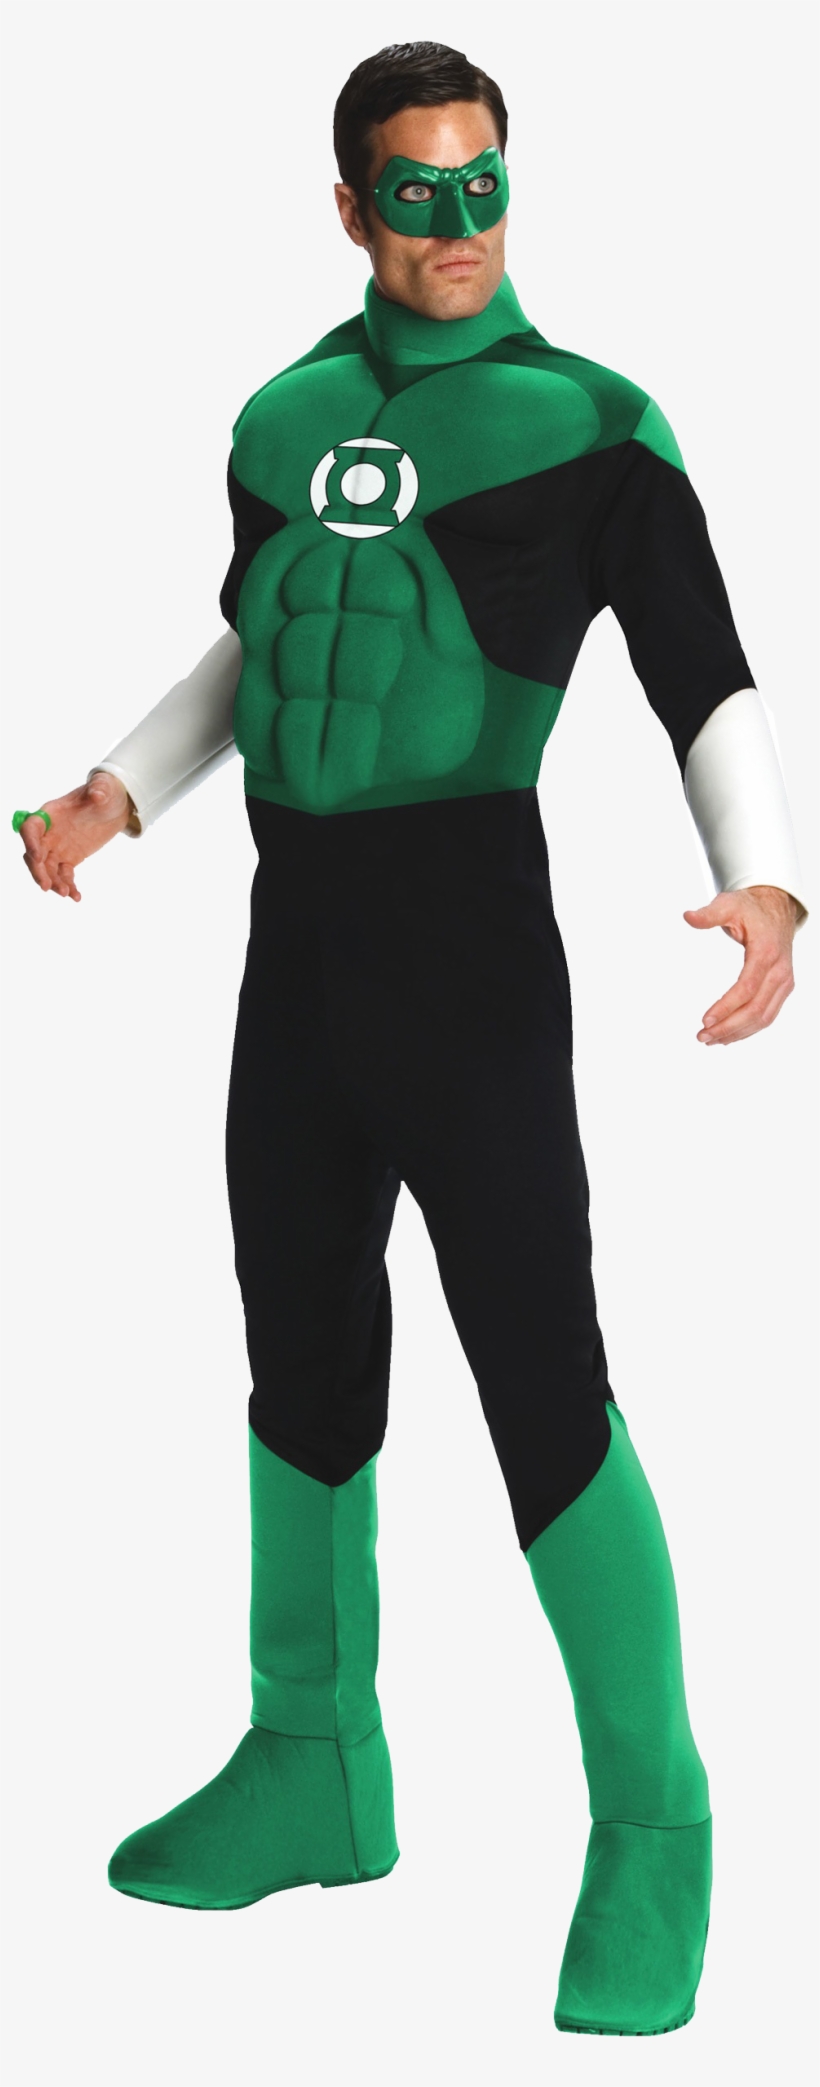 Costume Green Lantern, transparent png #1195934